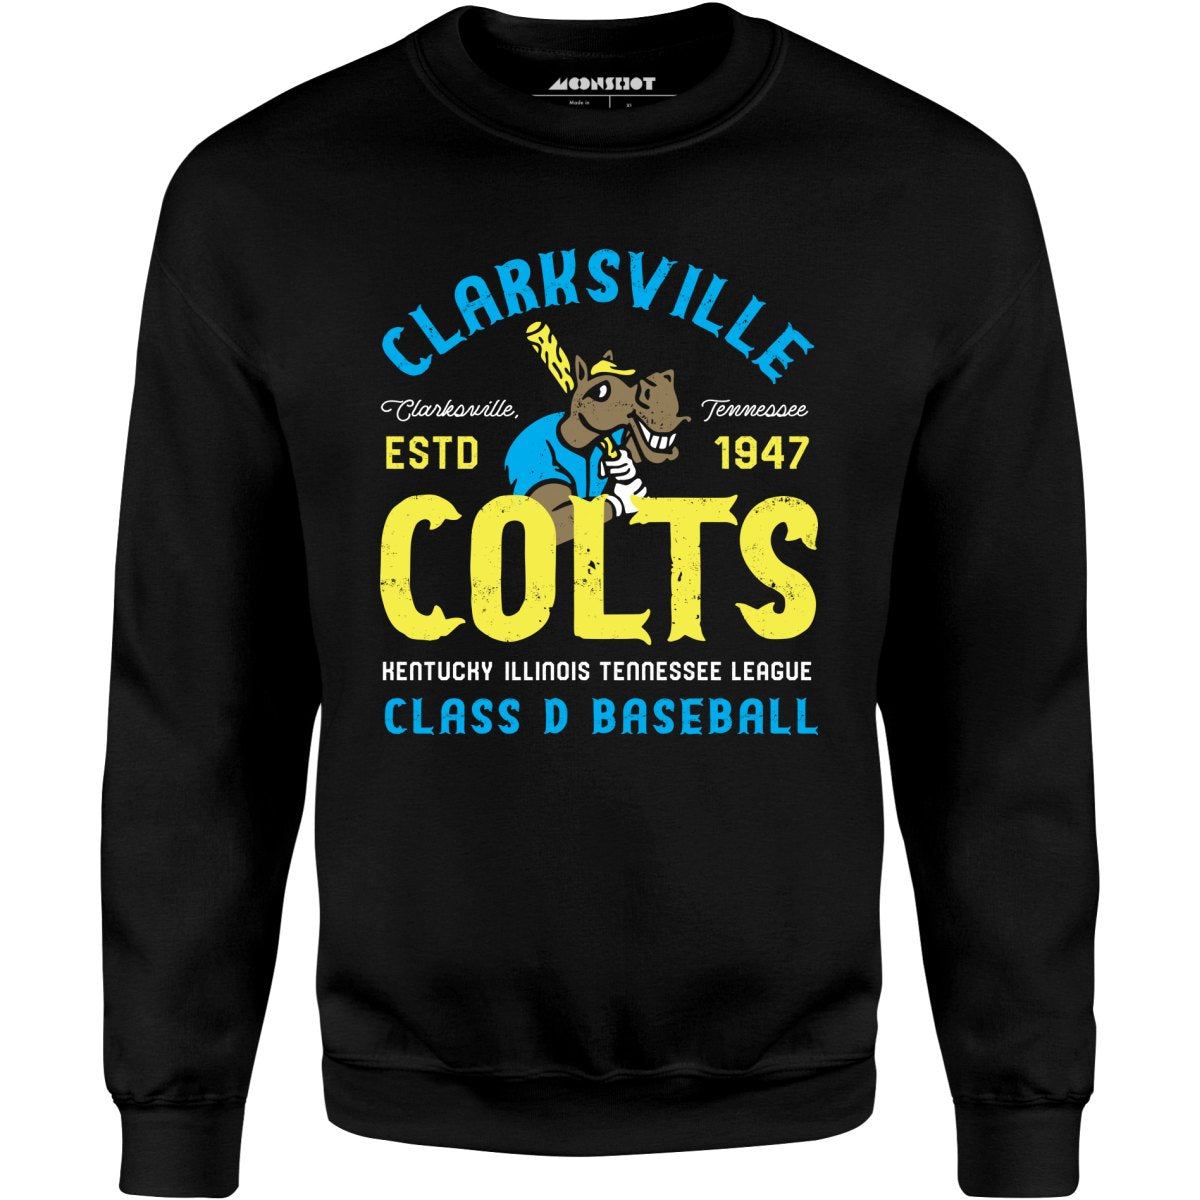 Clarksville Colts - Tennessee - Vintage Defunct Baseball Teams - Unisex Sweatshirt